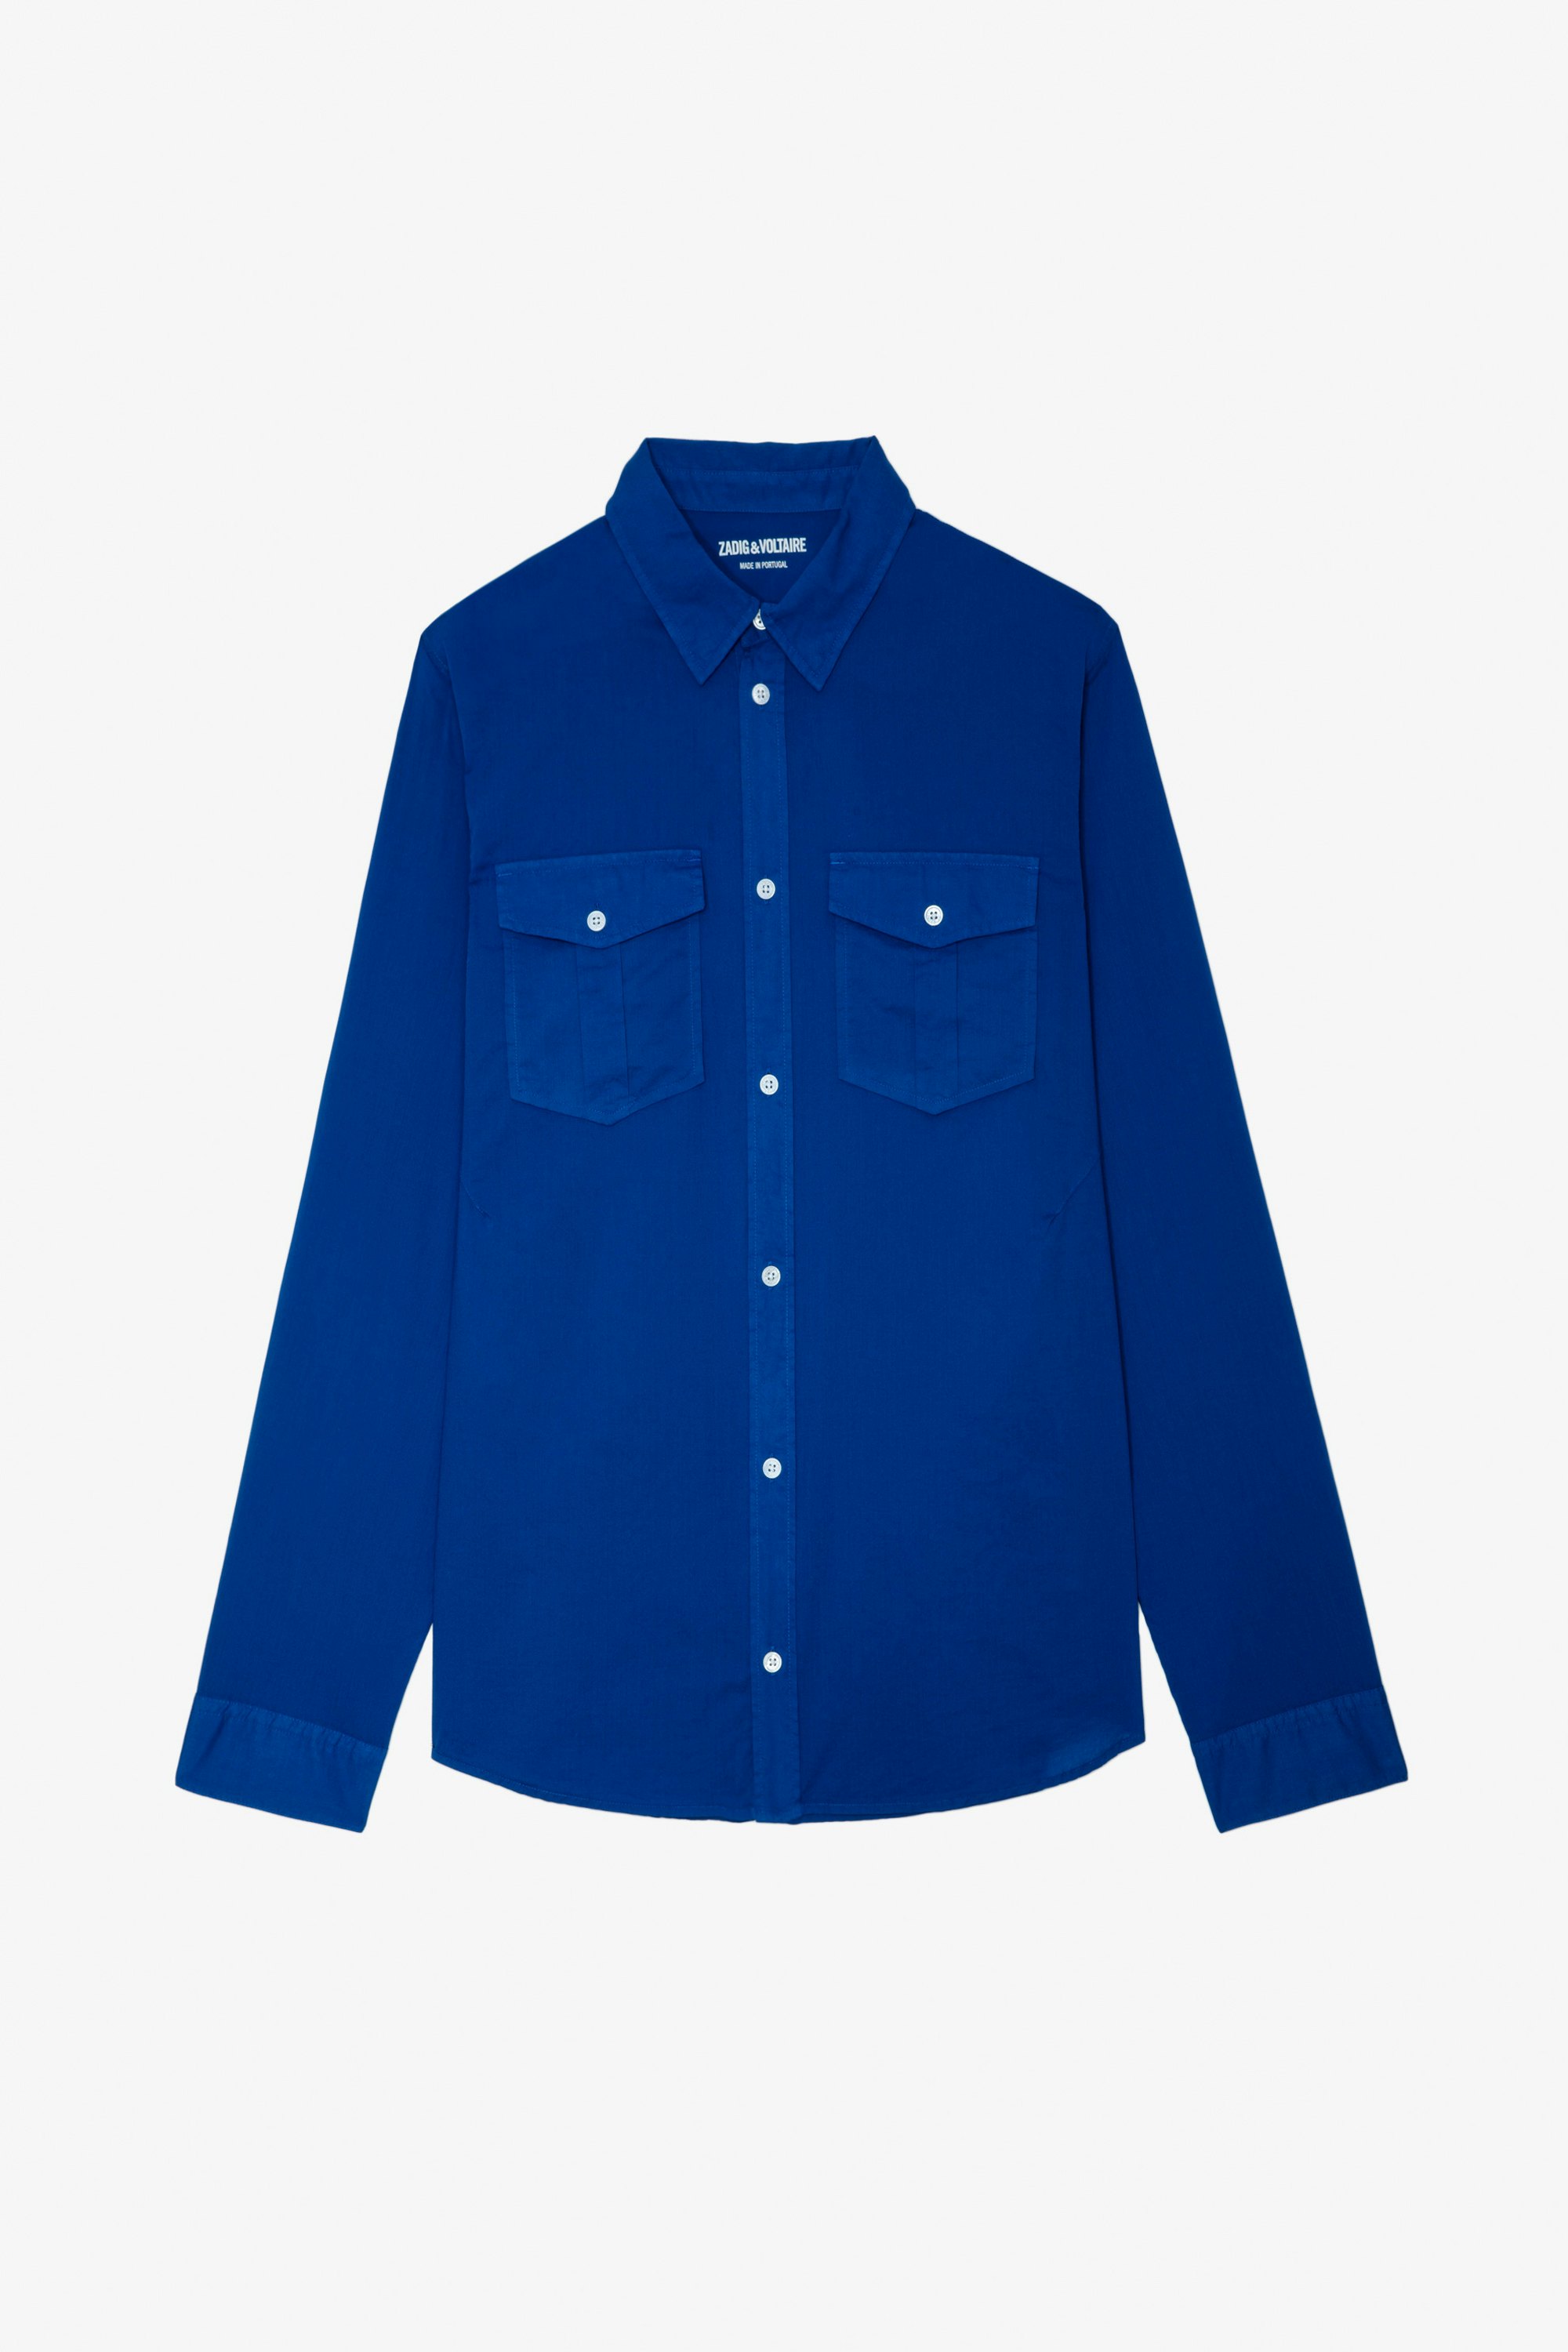 Thibault Shirt - Men’s blue cotton shirt.